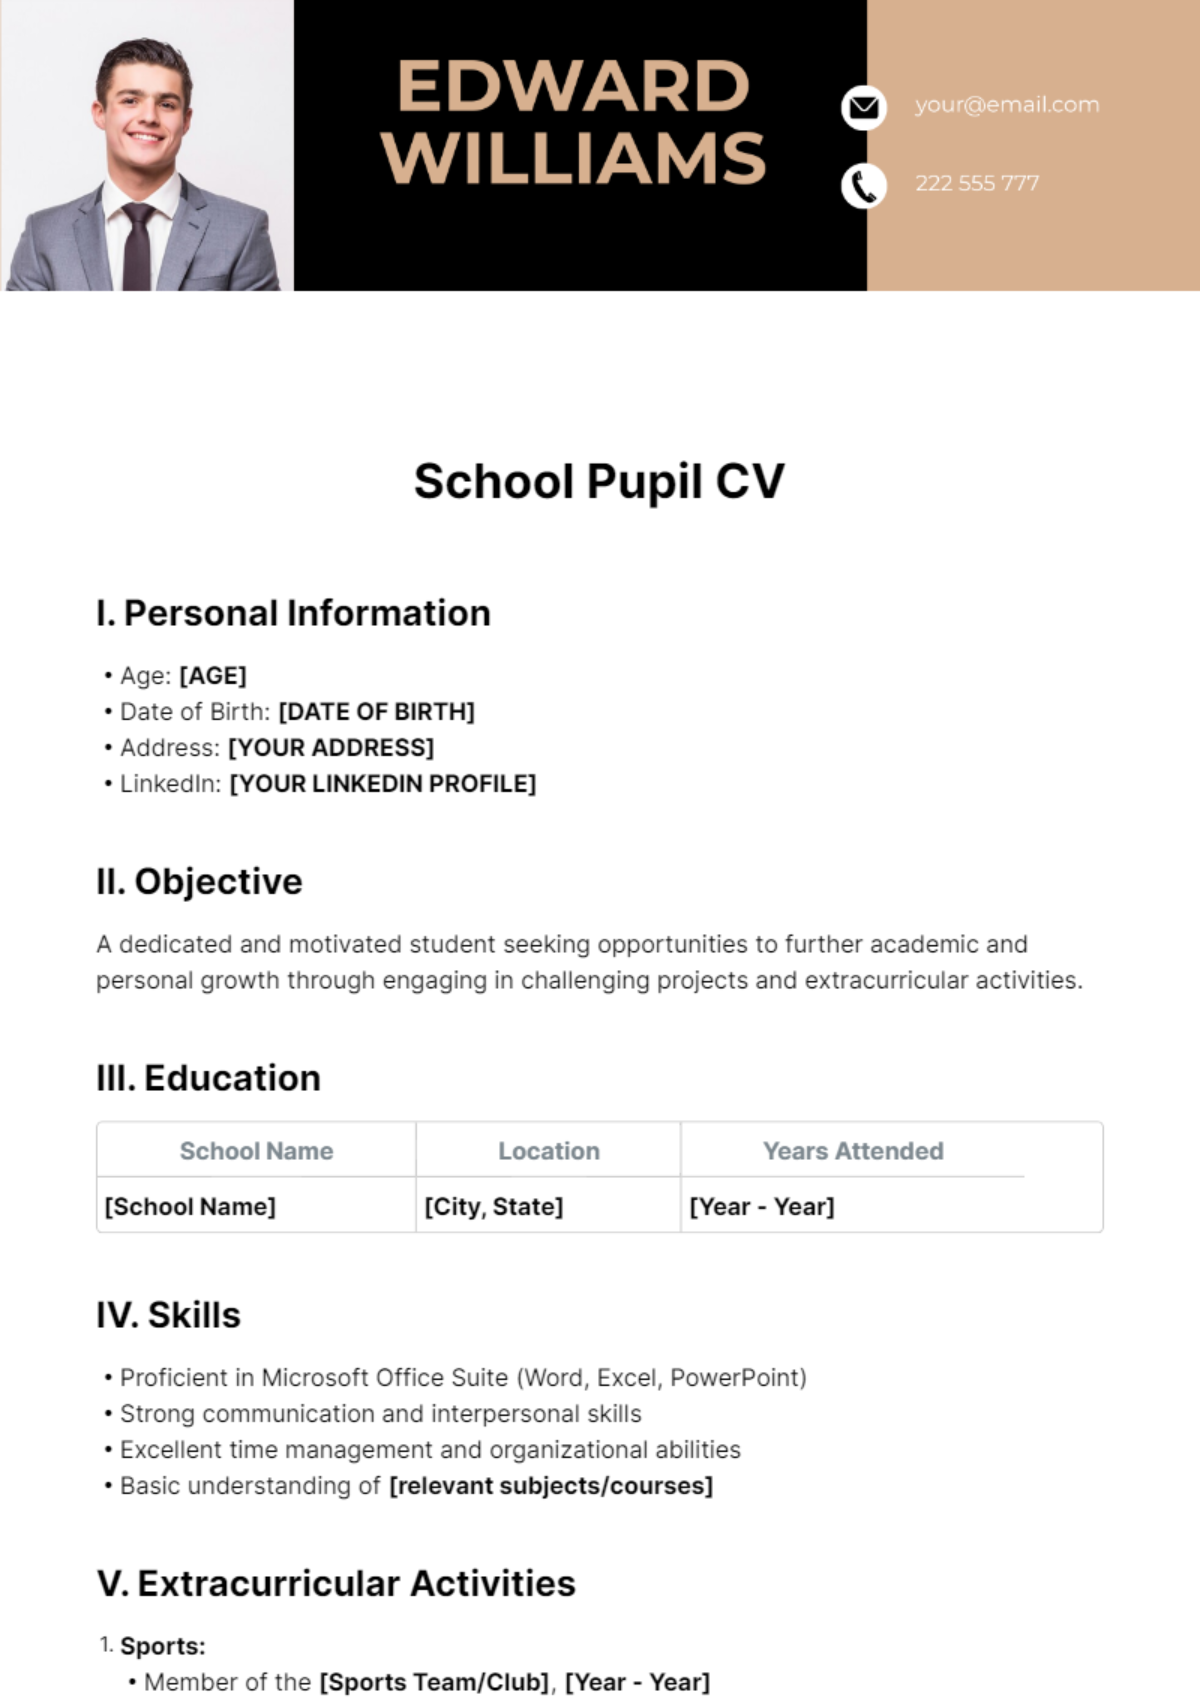 School Pupil CV Template